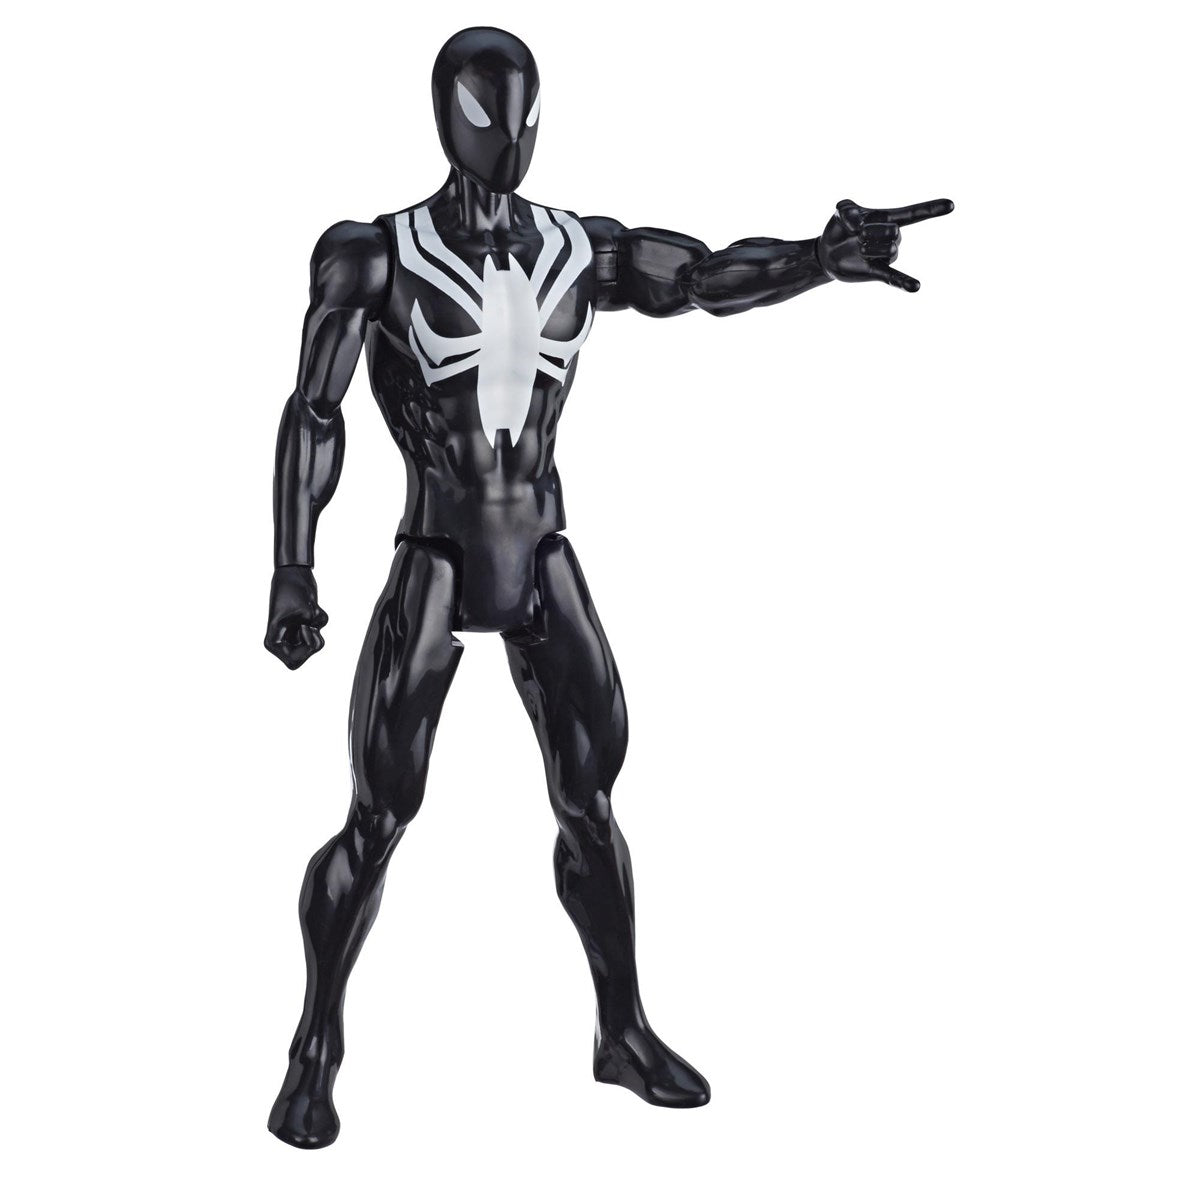 Spider-Man Titan Hero Web Warriors Figür - Black Suit Spiderman E7329-E8523 | Toysall